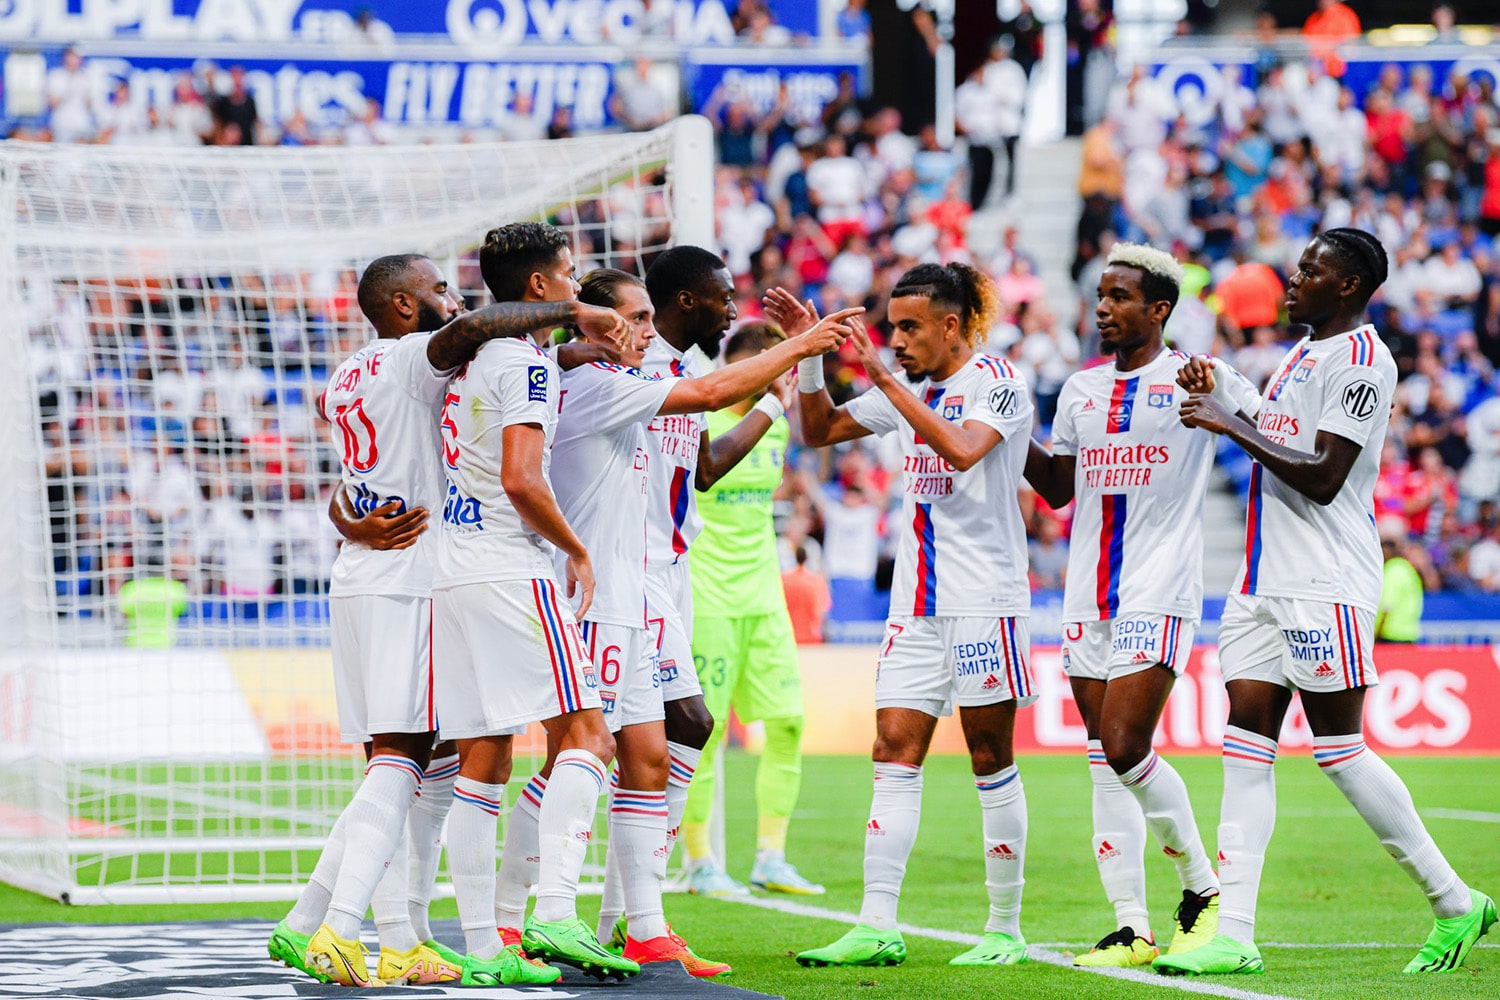 French team Olympique Lyonnais celebrate after scoring goal